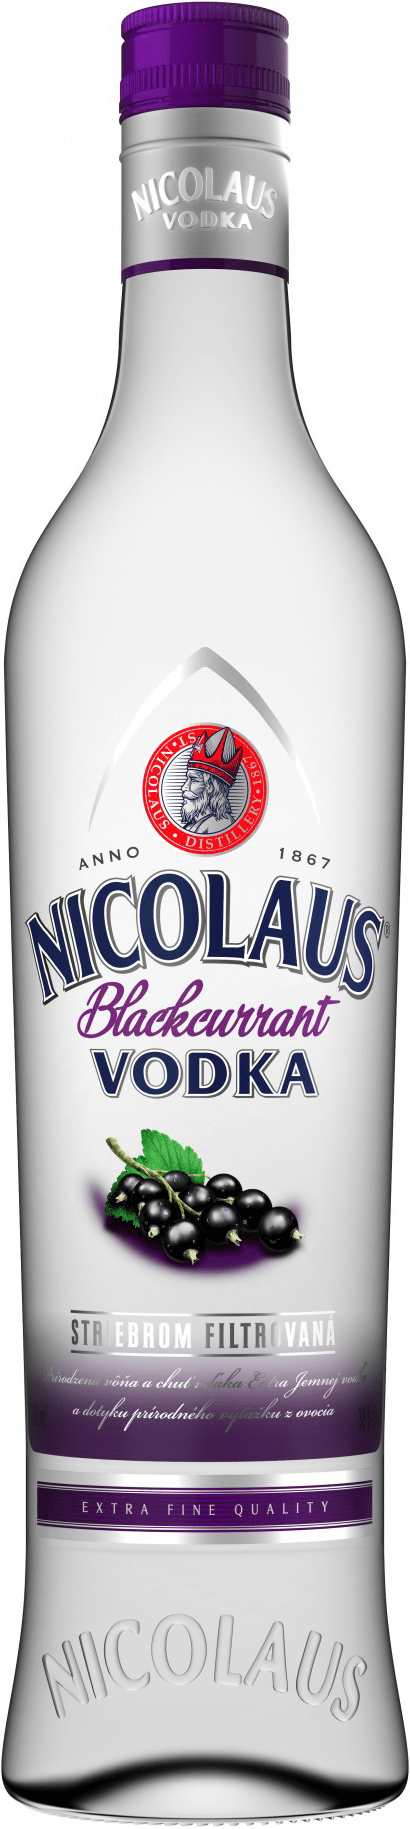 Nicolaus Blackcurrant Vodka 38% 0,7l